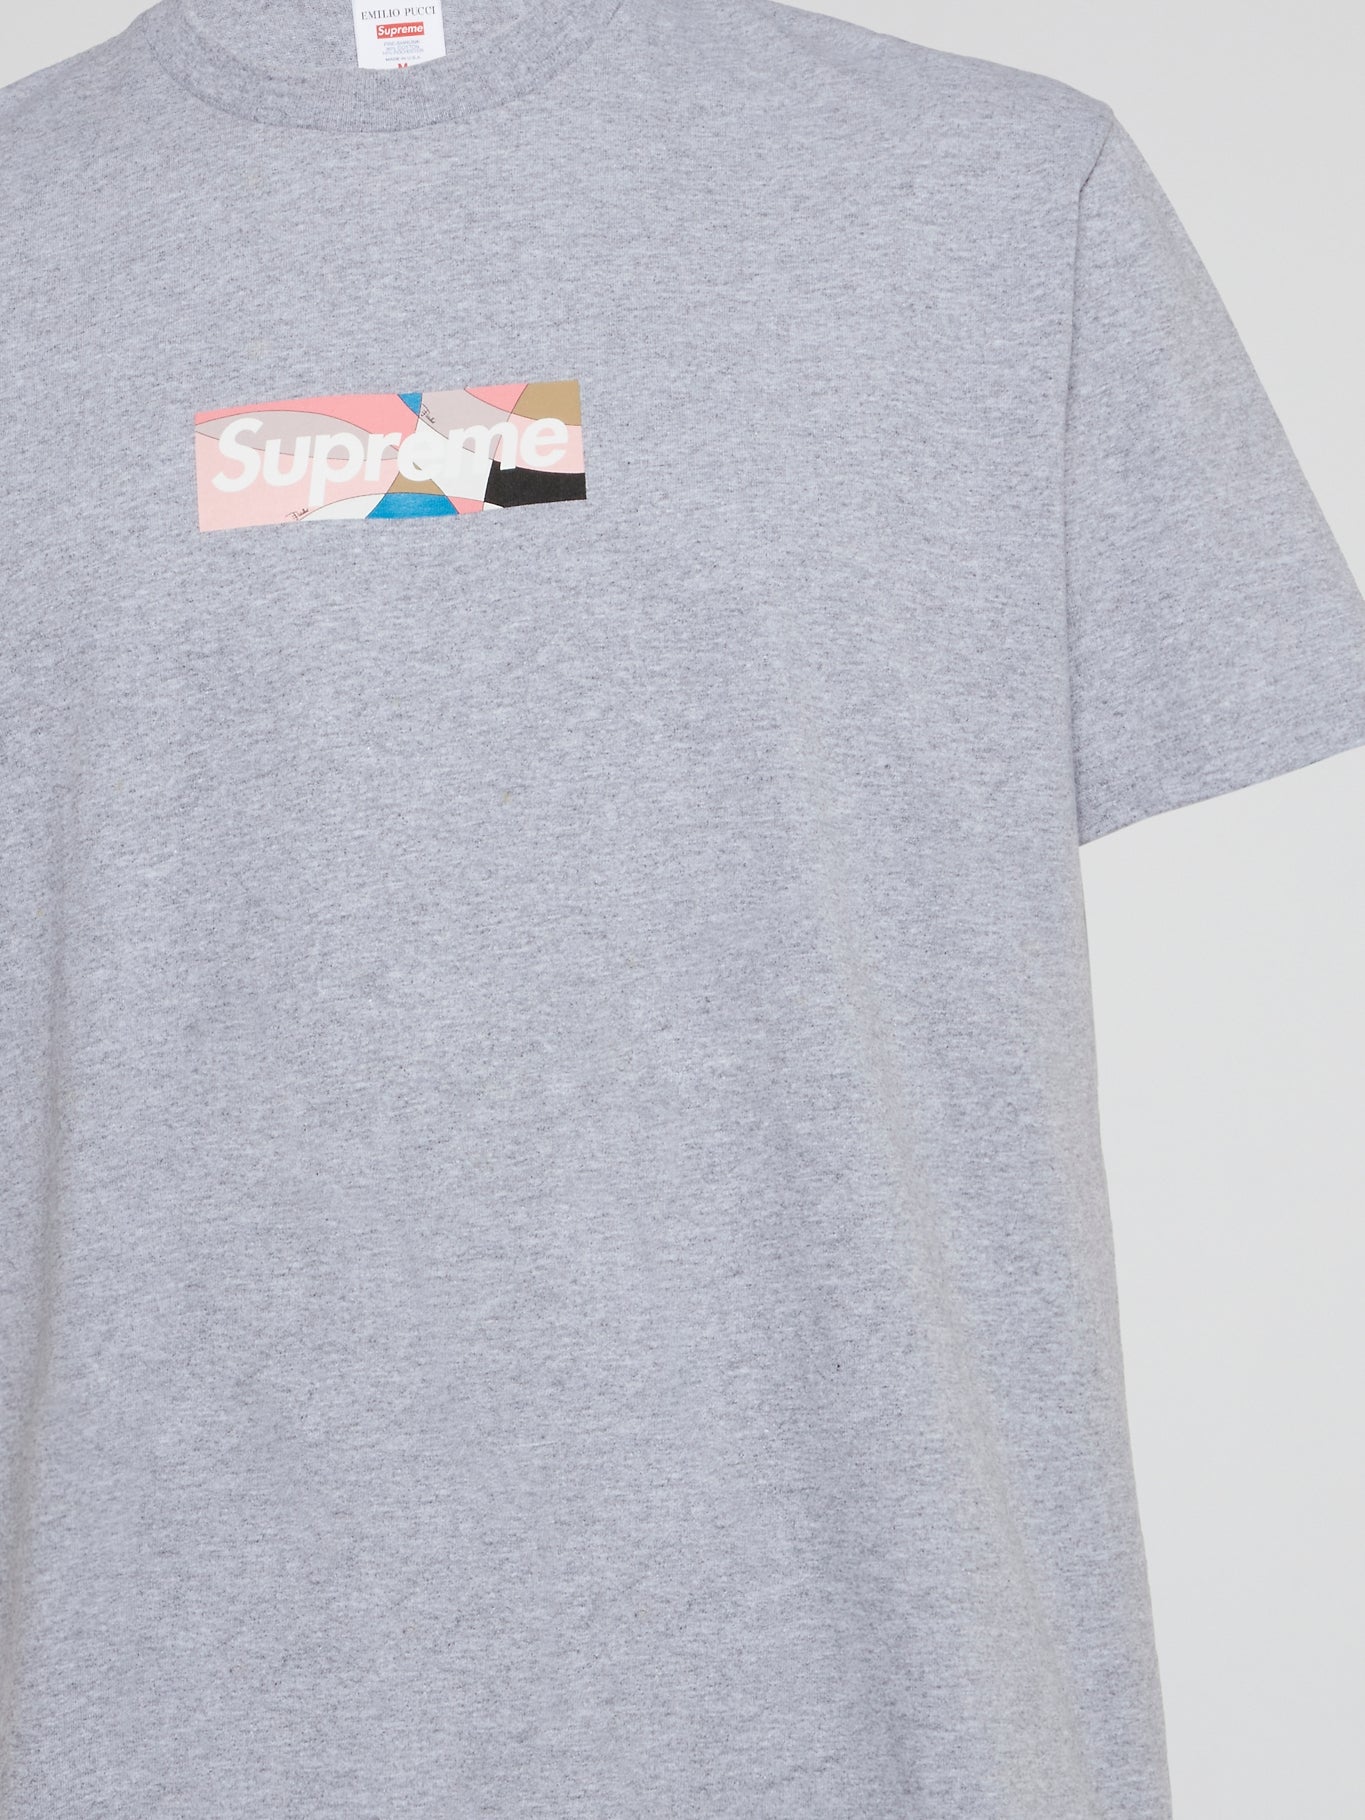 Supreme x Emilio Pucci Box Logo Crew Neck T-Shirt - Grey